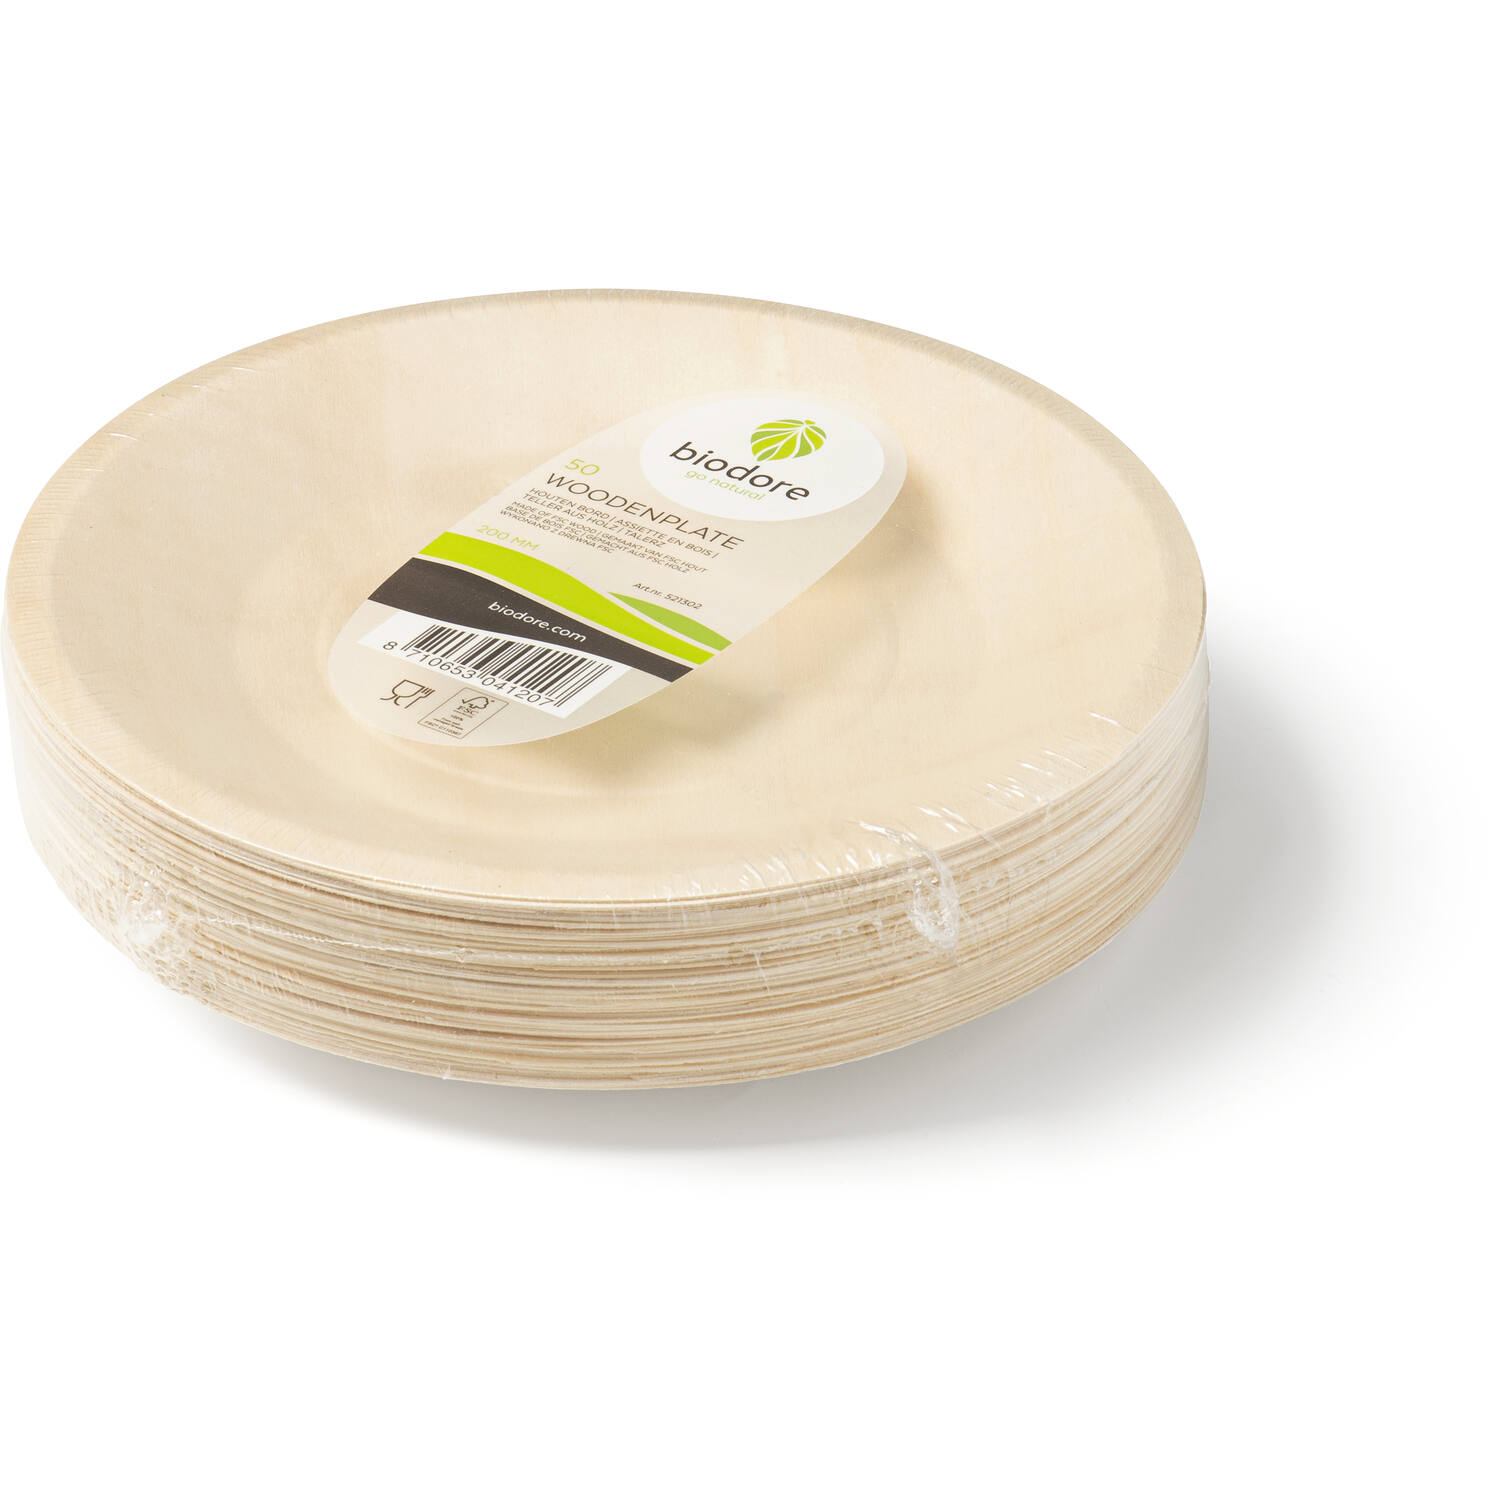 Biodore Plate, round, wood, Ø200mm, natural 2